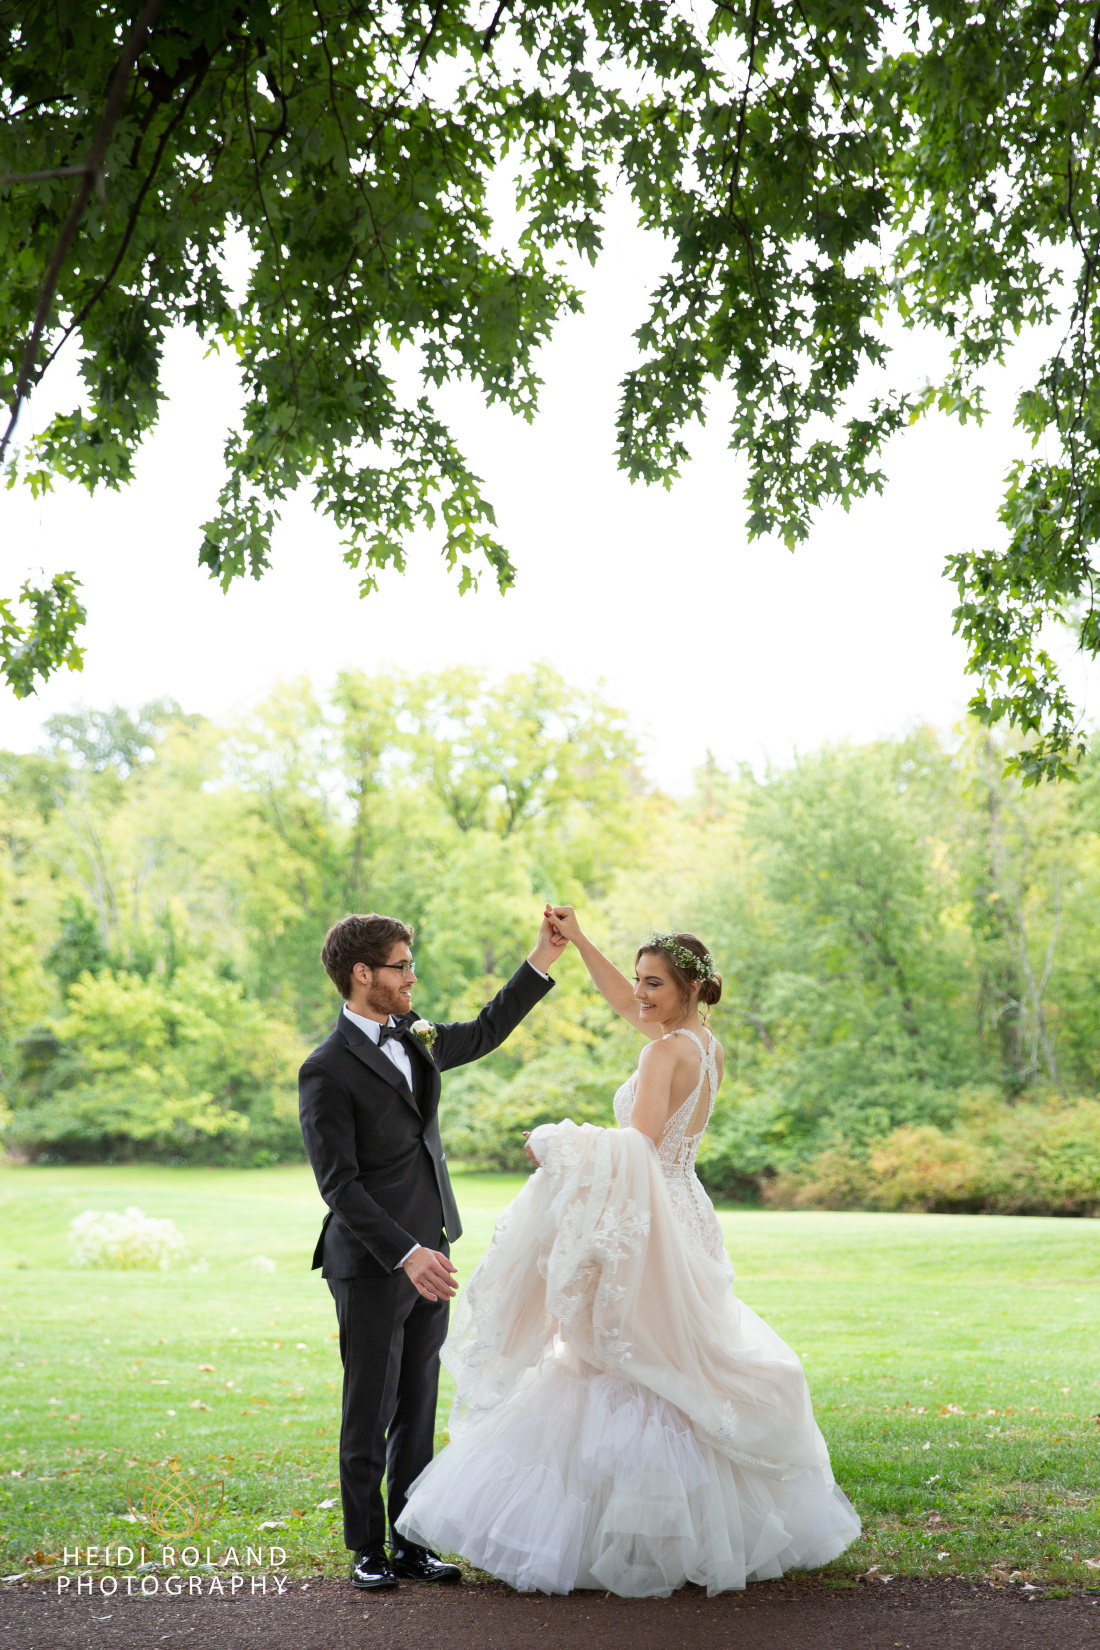 Groom spinning bride on grass path in philadelphia suburbs wedding